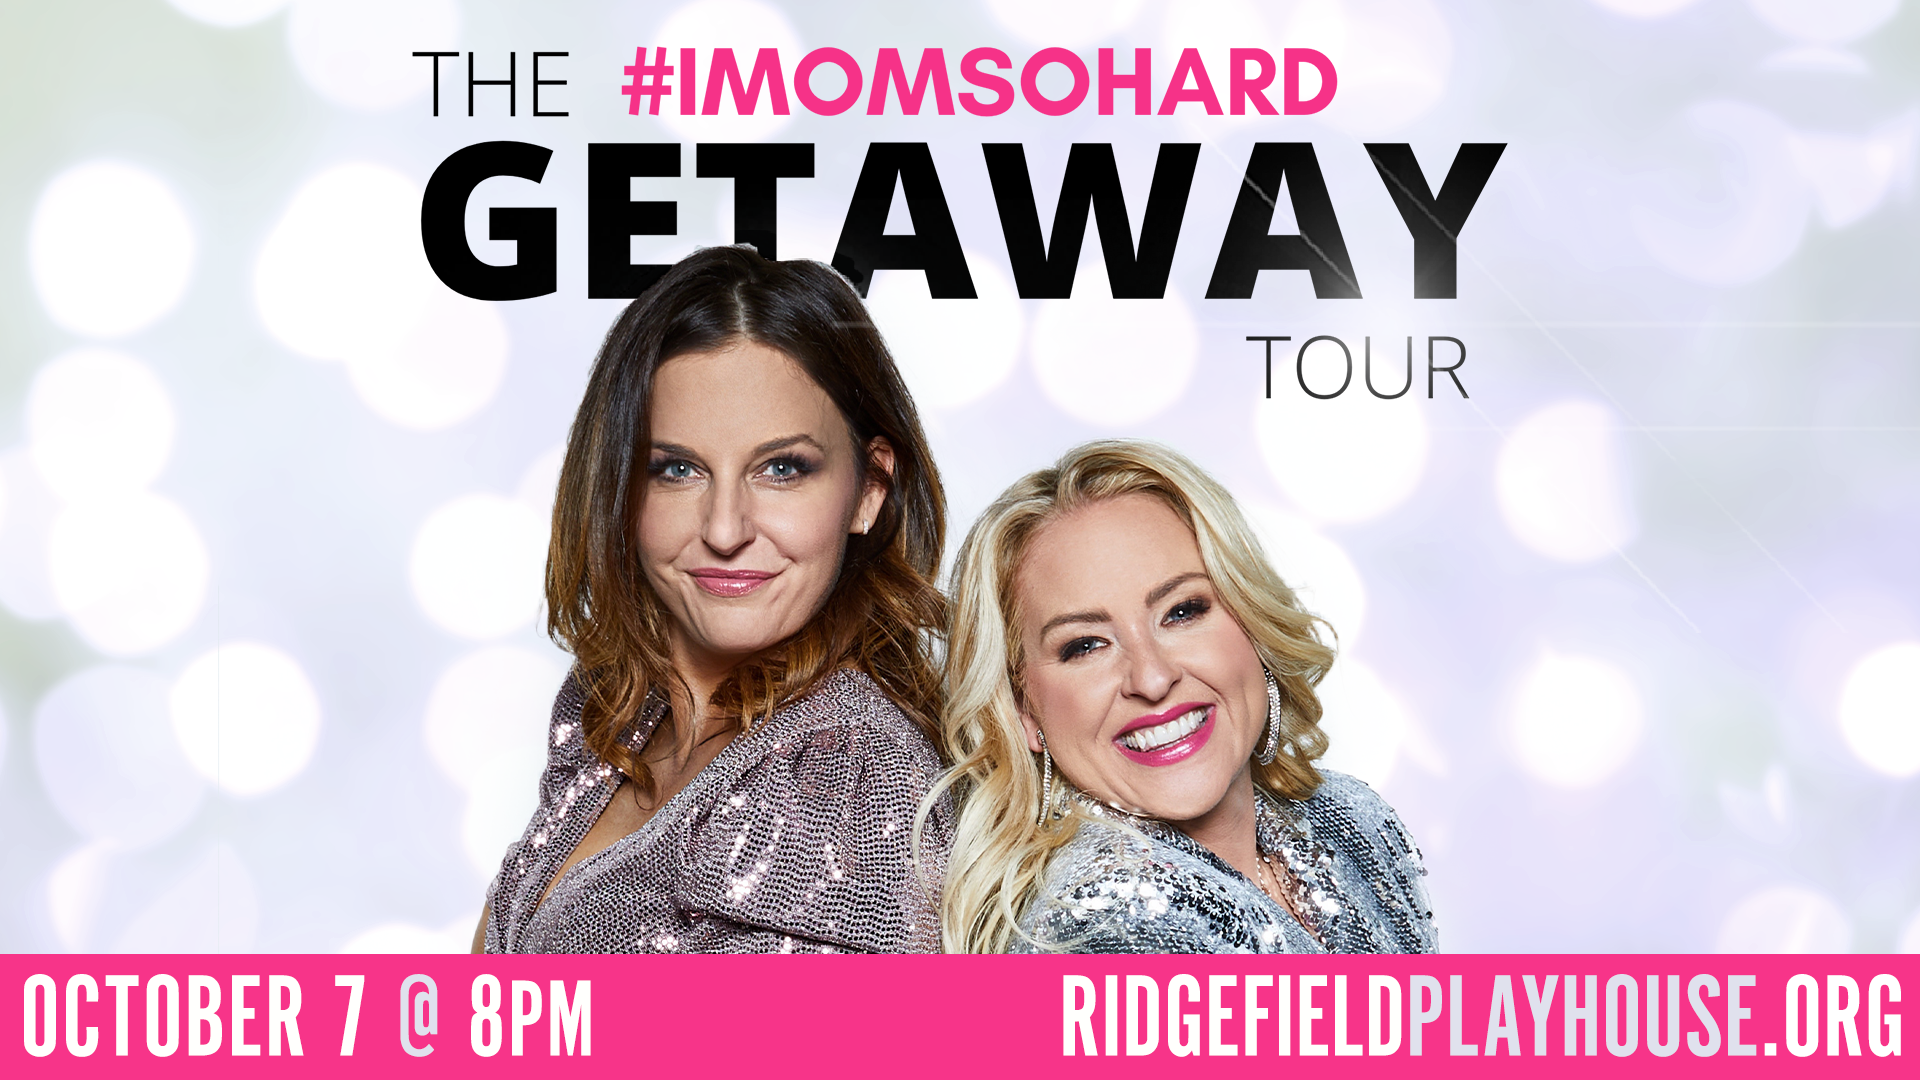 #IMOMSOHARD – The Getaway Tour